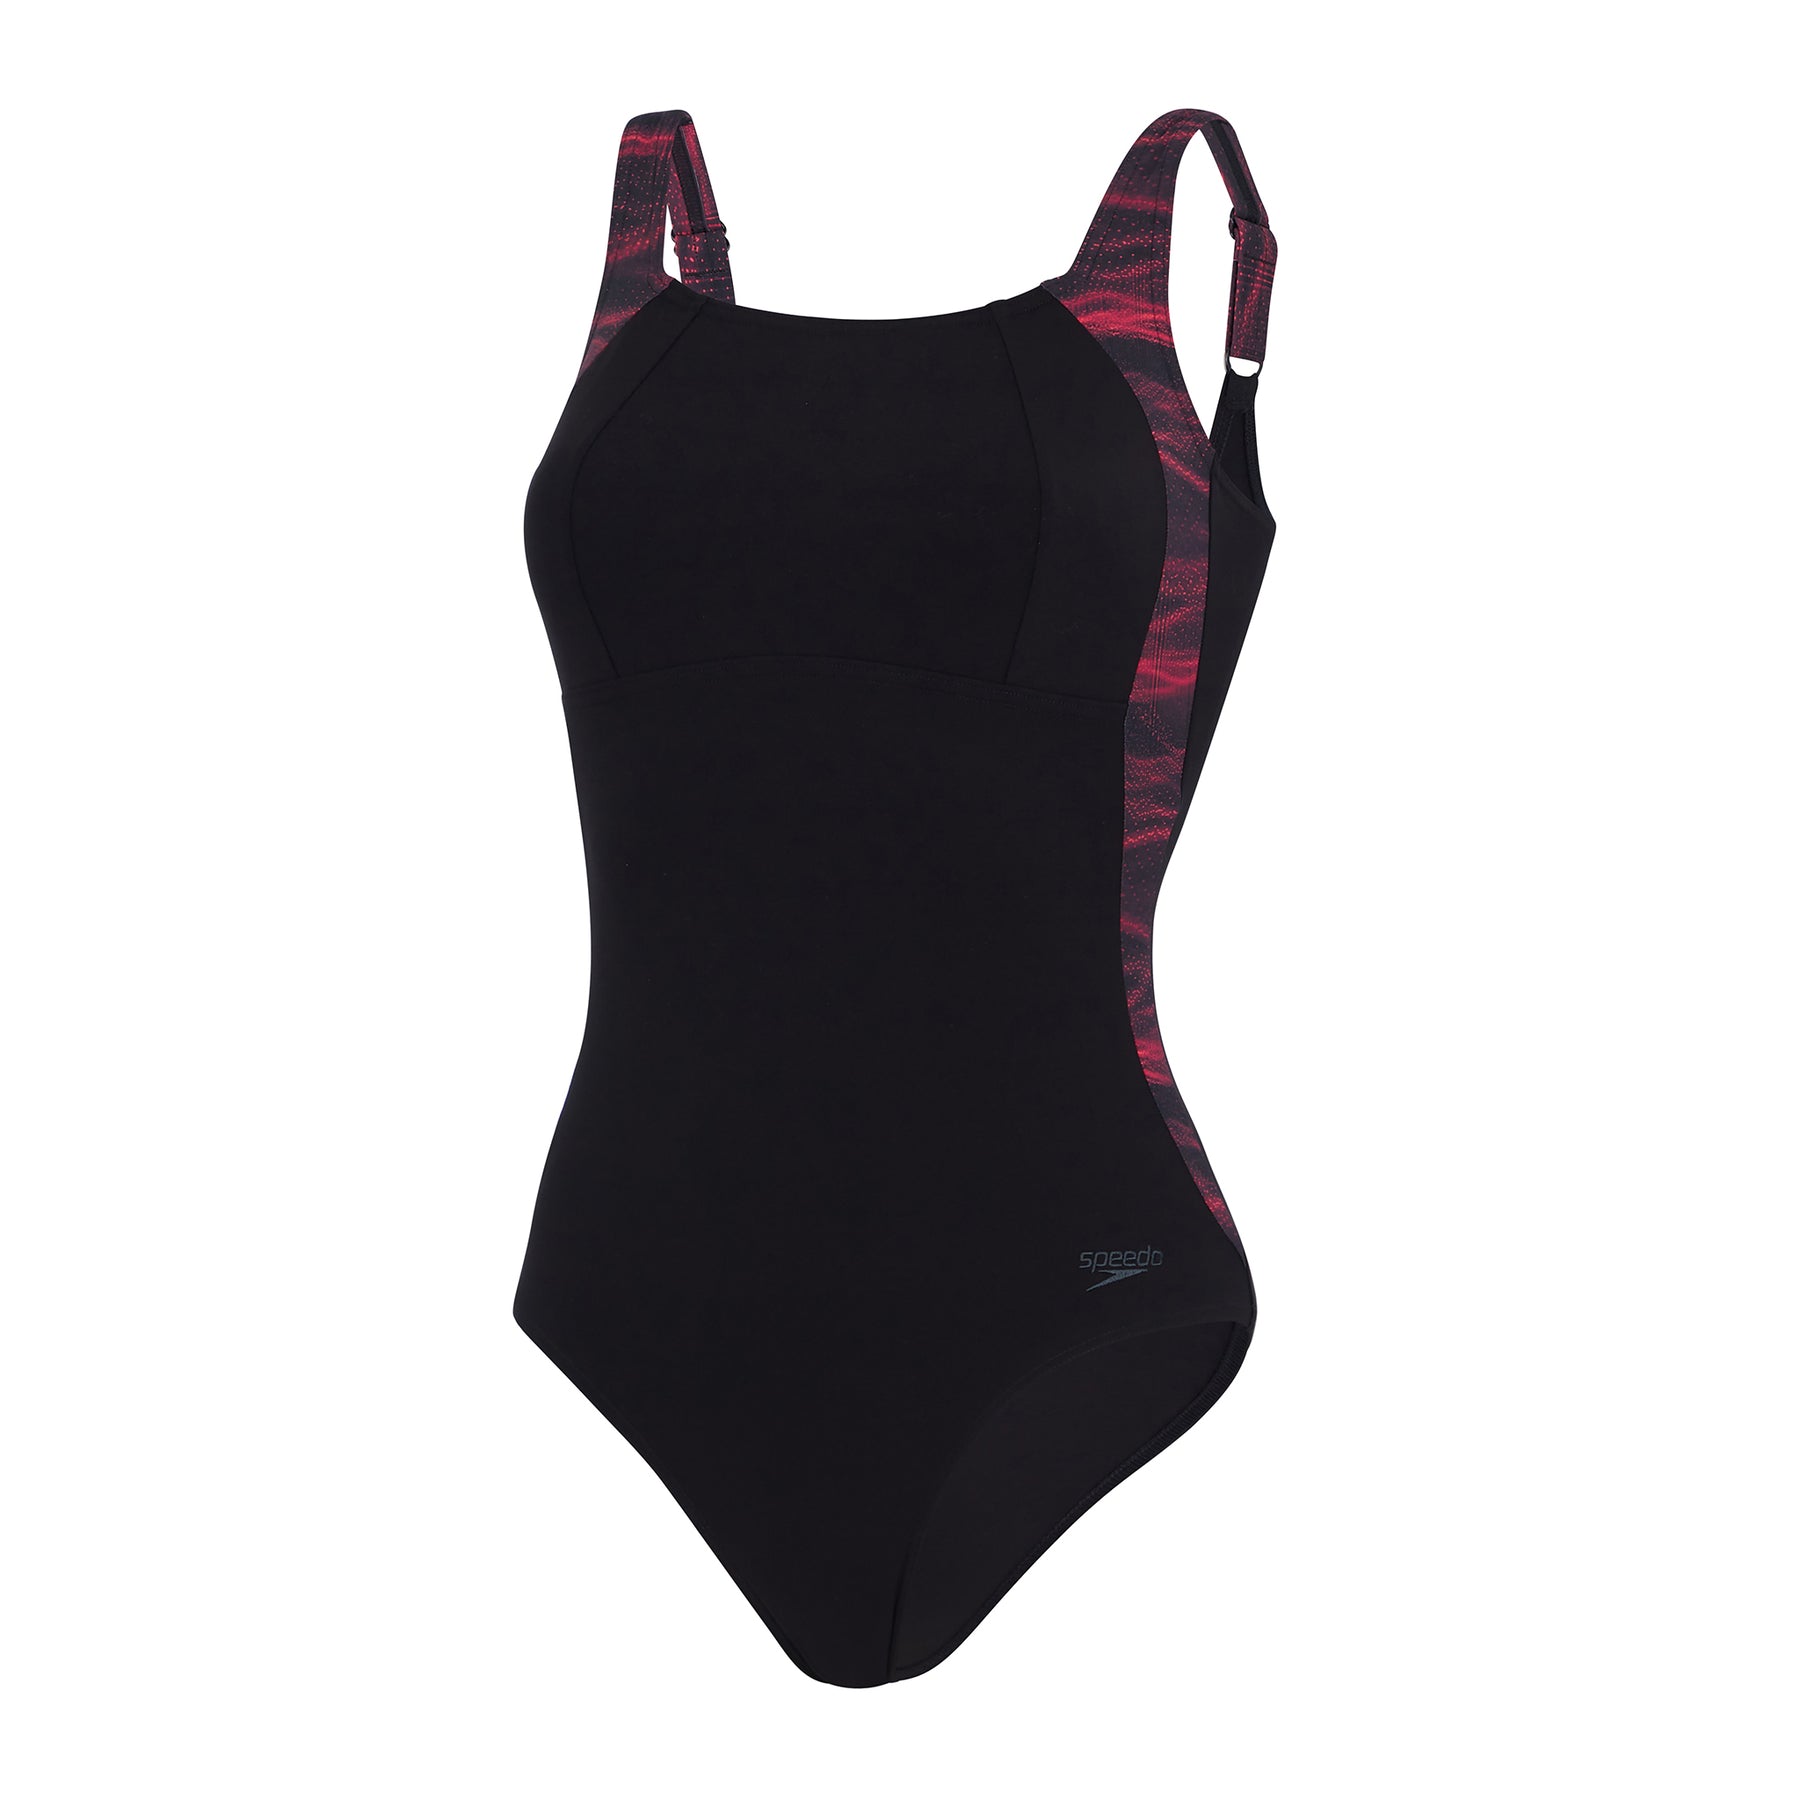 Speedo Women's LunaLustre Printed Swimsuit: Black/Red